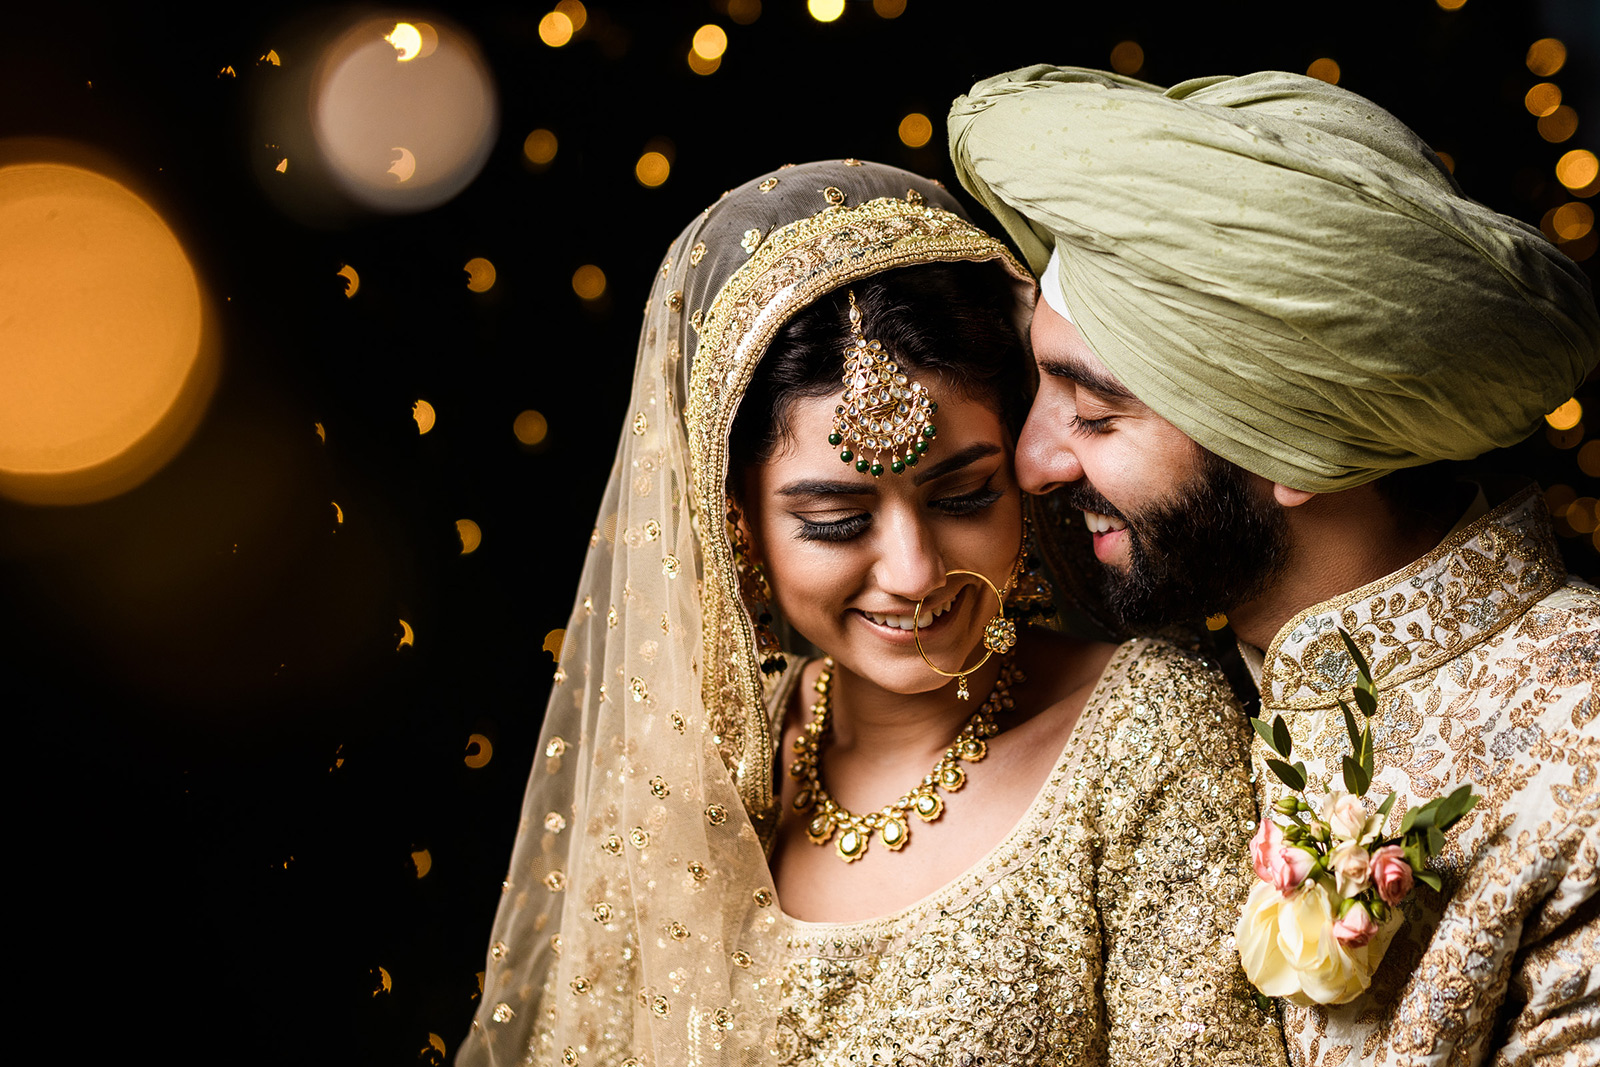 Sikh Wedding Couple portrait on their wedding day